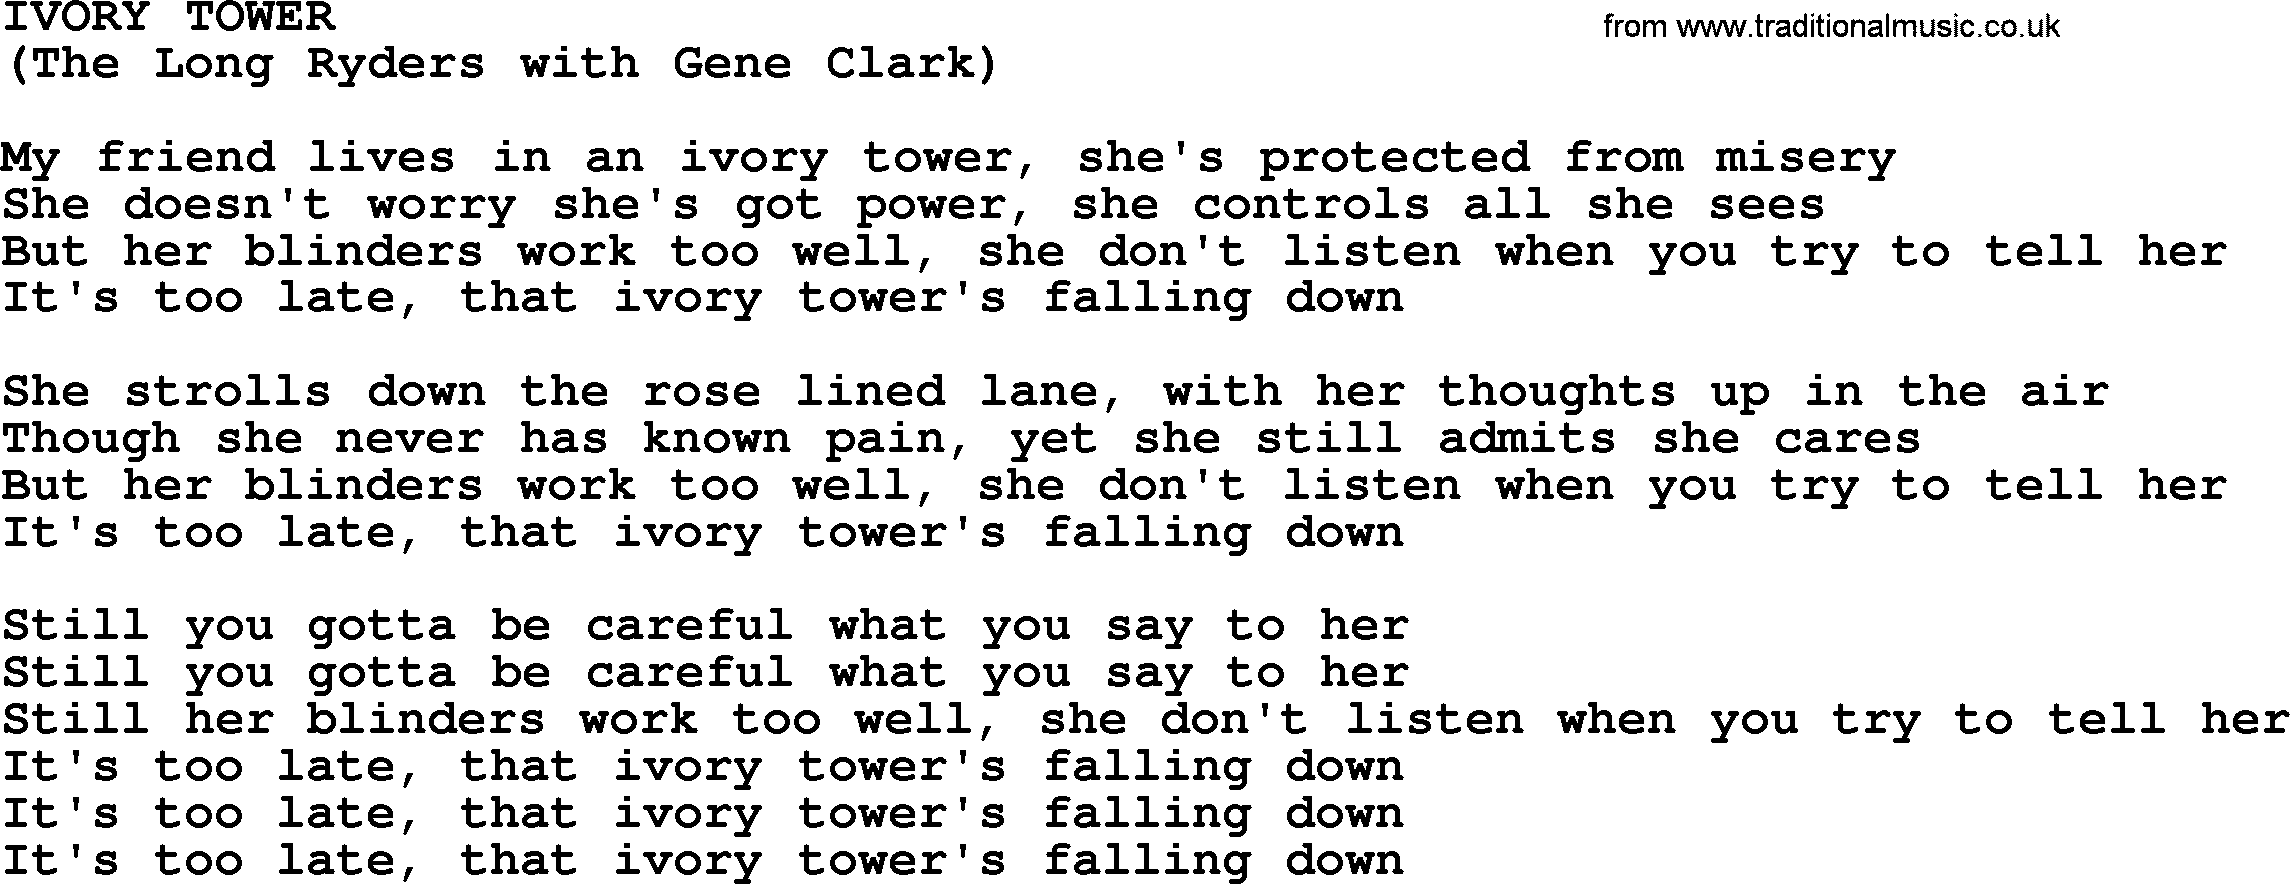 The Byrds song Ivory Tower, lyrics